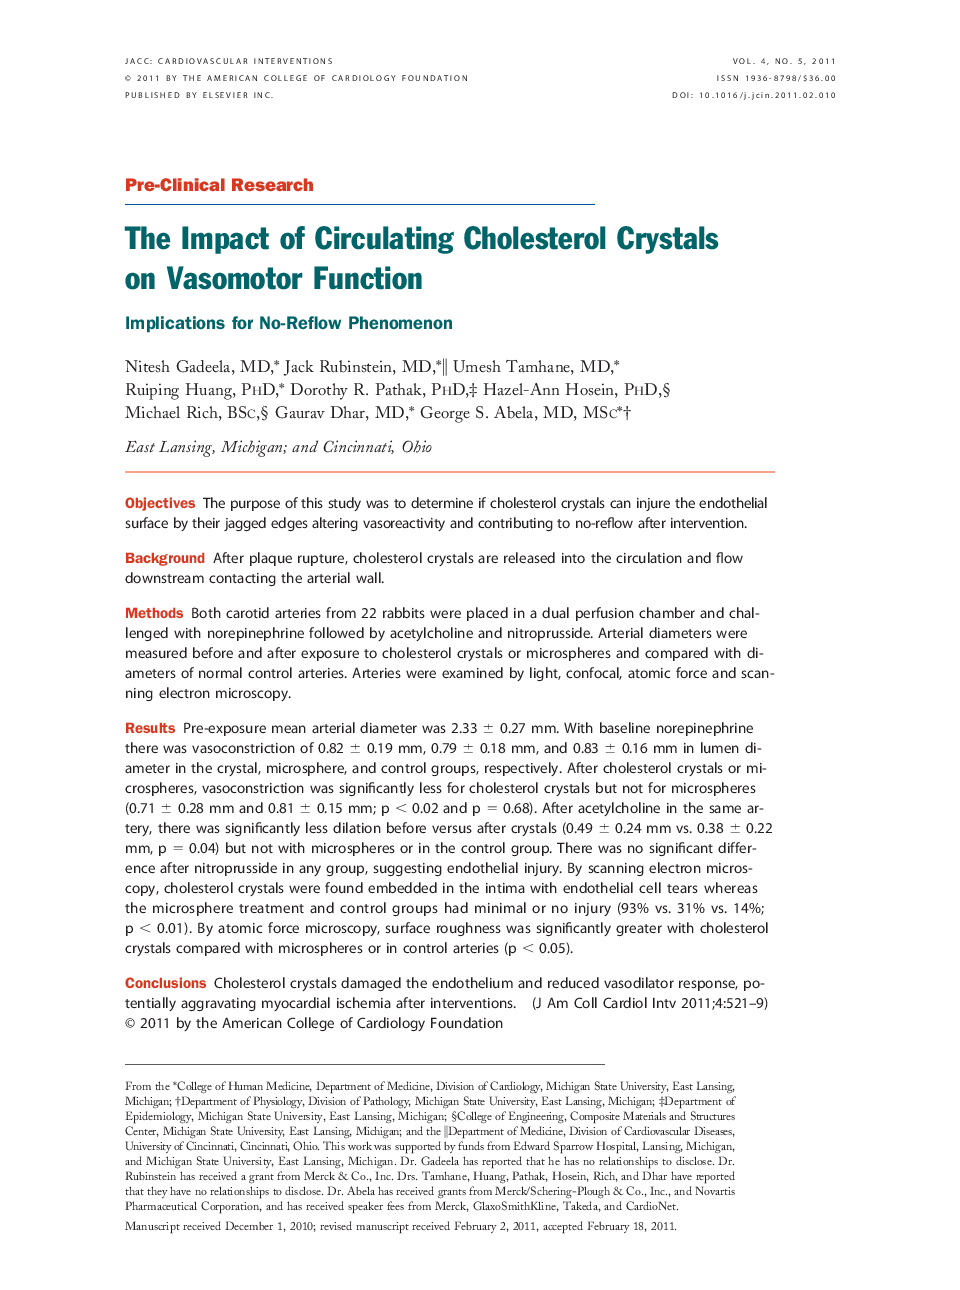 The Impact of Circulating Cholesterol Crystals on Vasomotor Function : Implications for No-Reflow Phenomenon